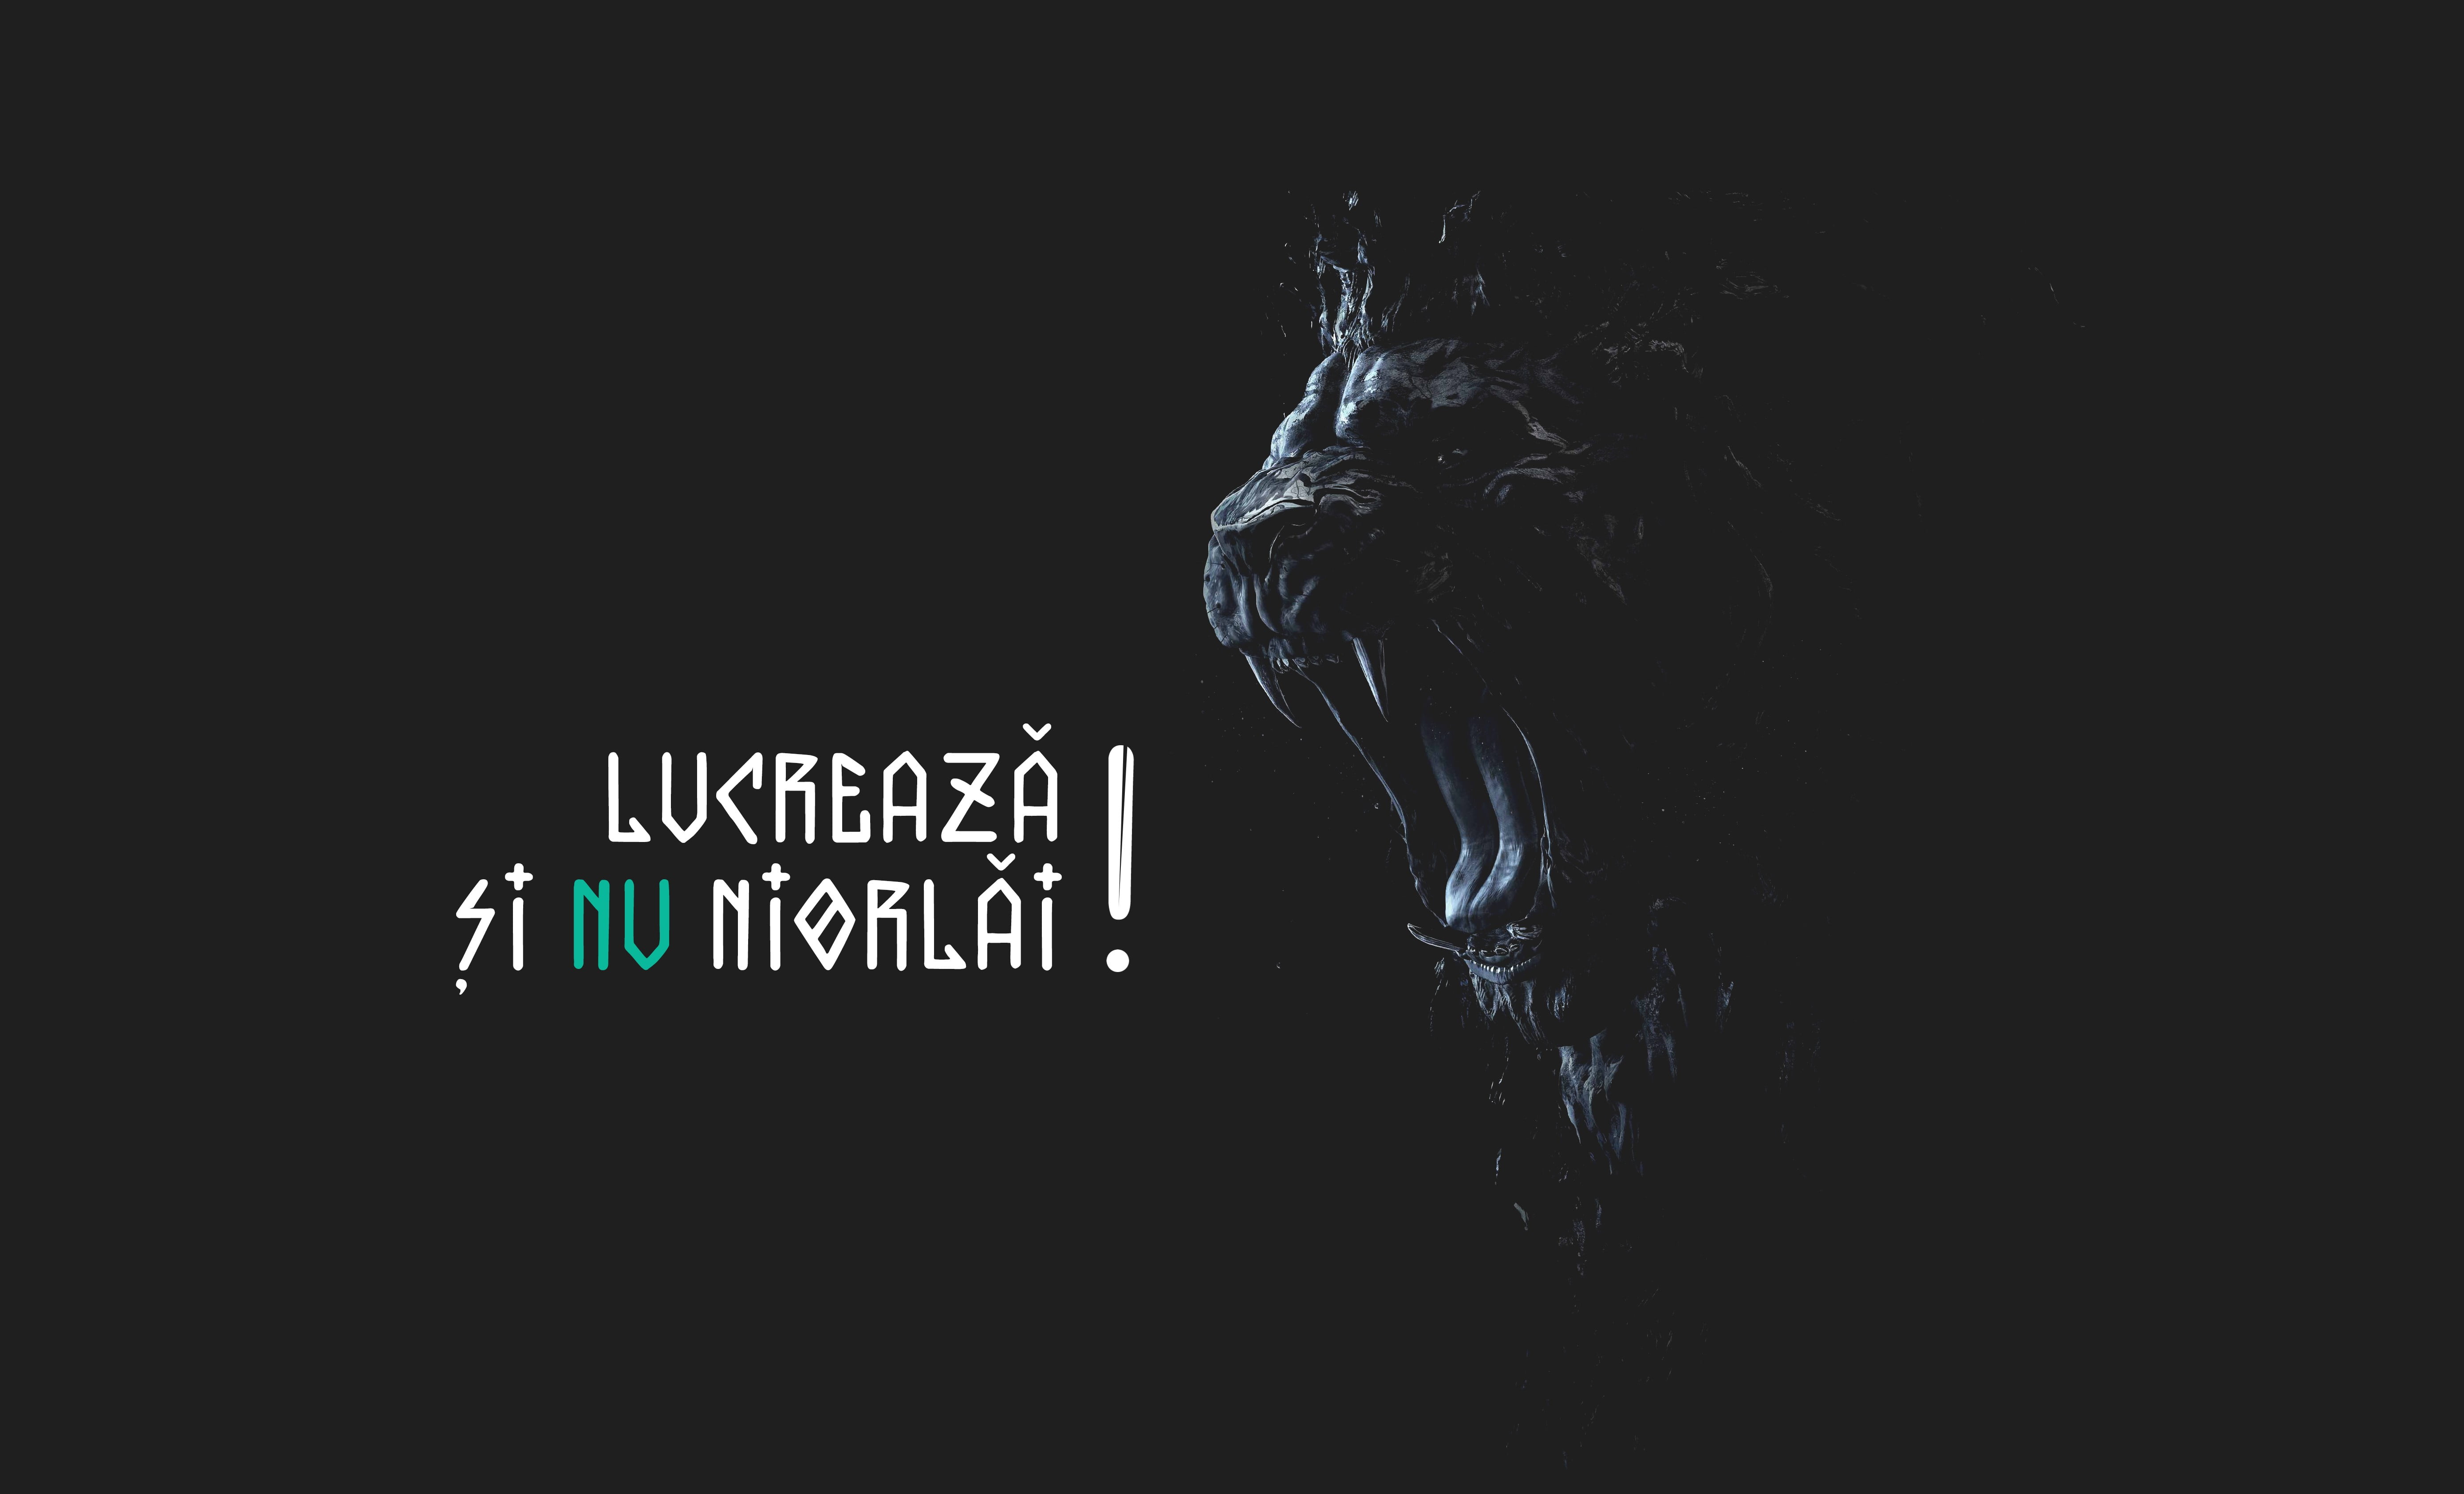 black roaring lion digital wallpaper, brilliancereview, lucreaza